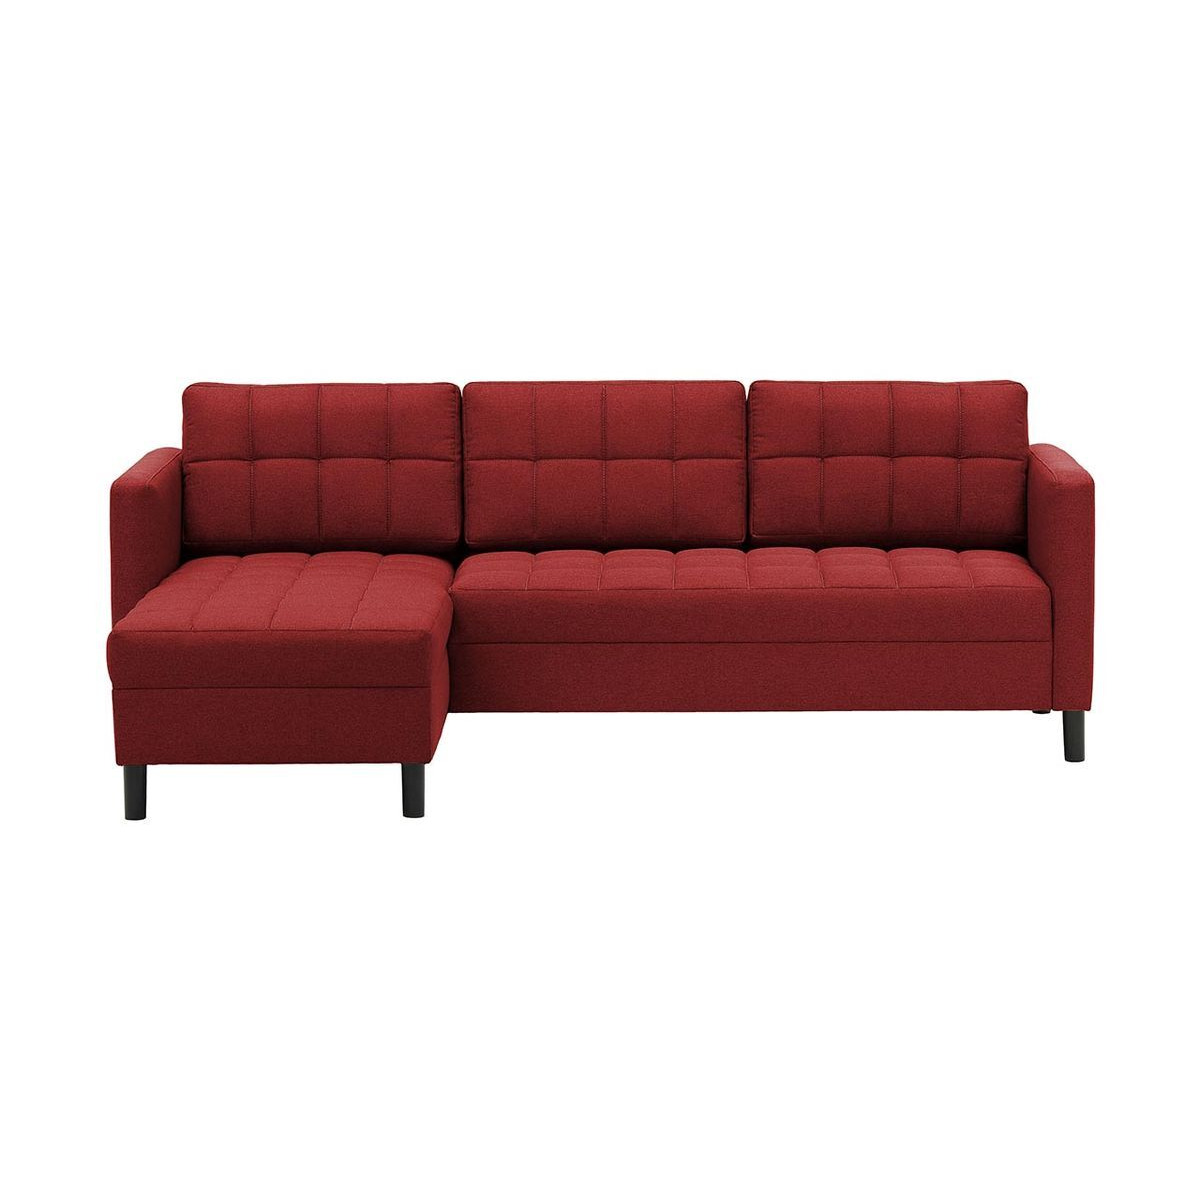 Ludo Universal Corner Sofa, red - image 1